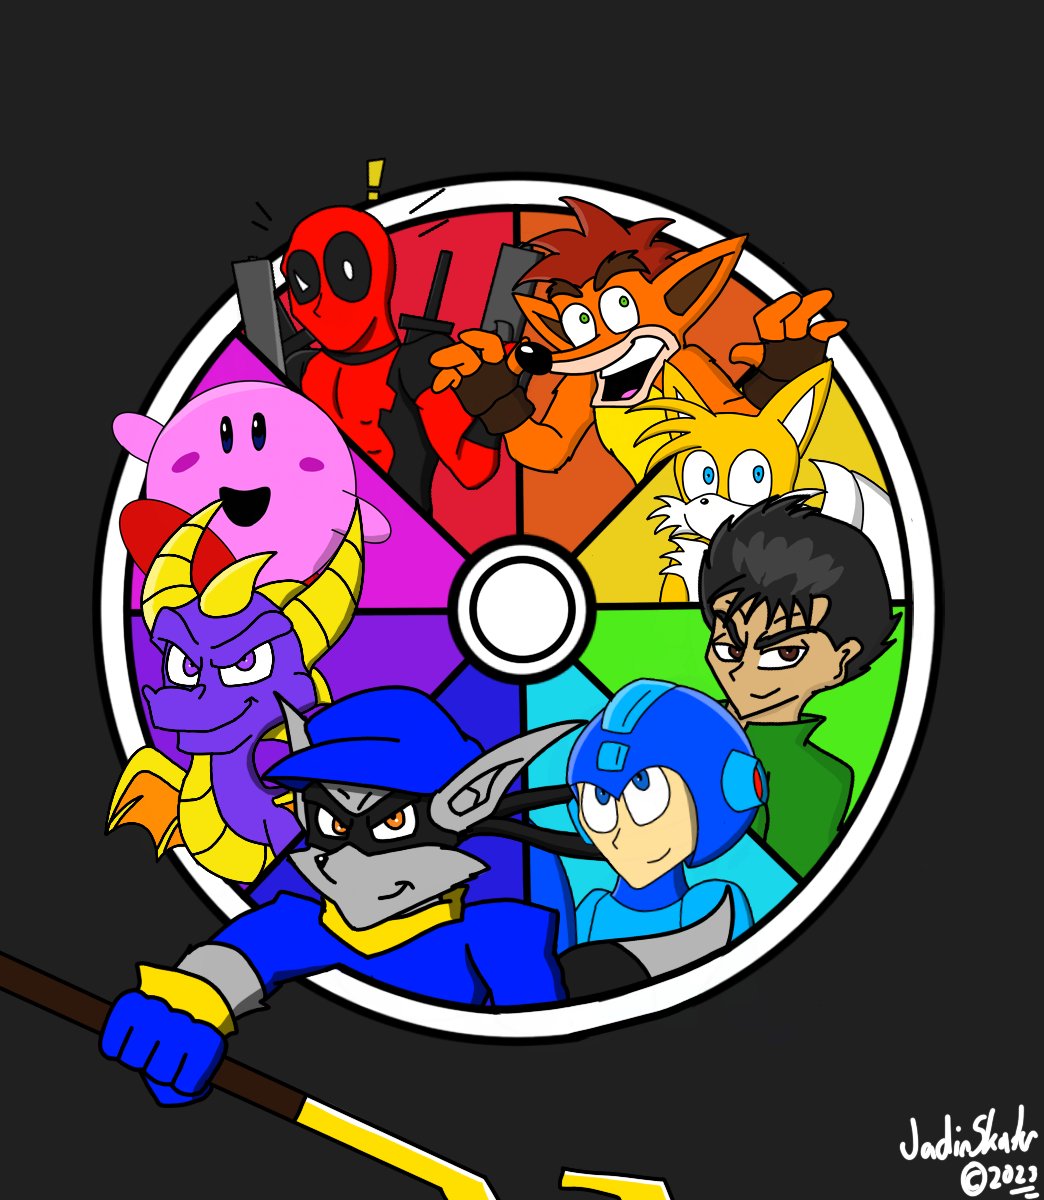 The Color wheel is done!
#Deadpool #CrashBandicoot #Yusuke #SlyCooper #Tails #Megaman #Kirby #SpyroTheDragon